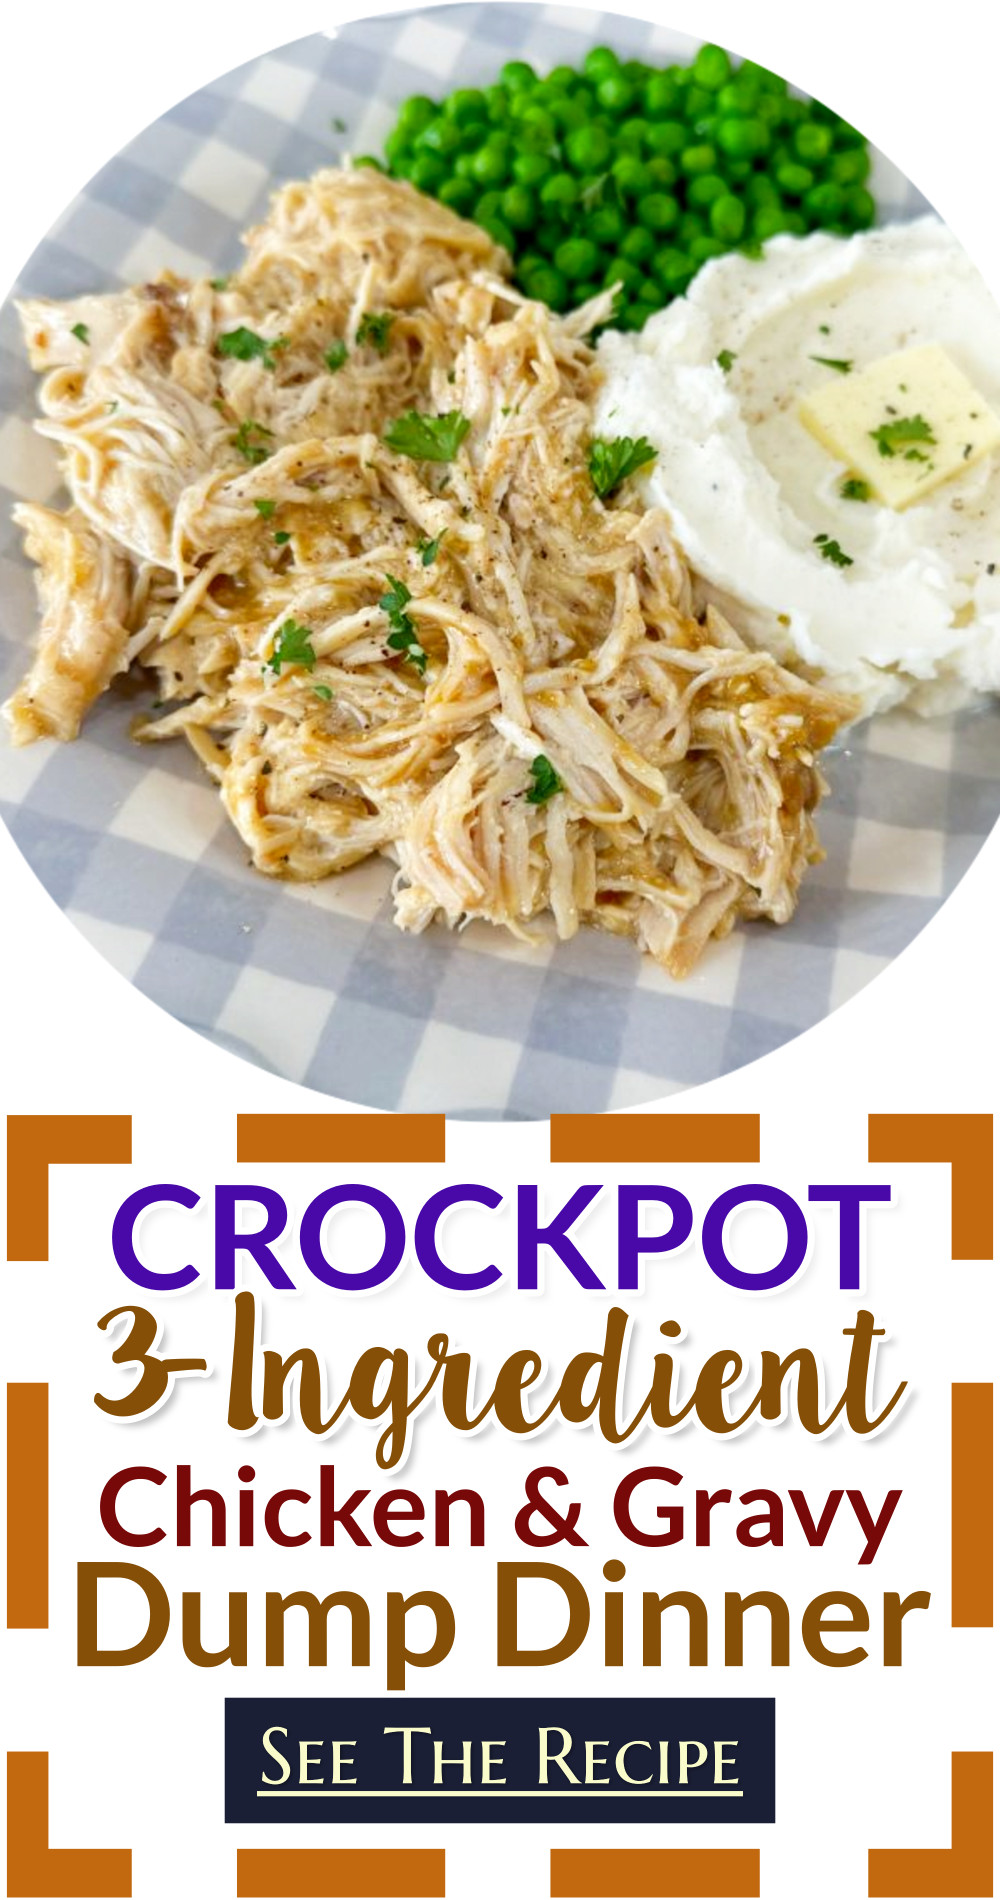 Crockpot 3-Ingredient Shredded Chicken and Gravy Dump Dinner Recipe